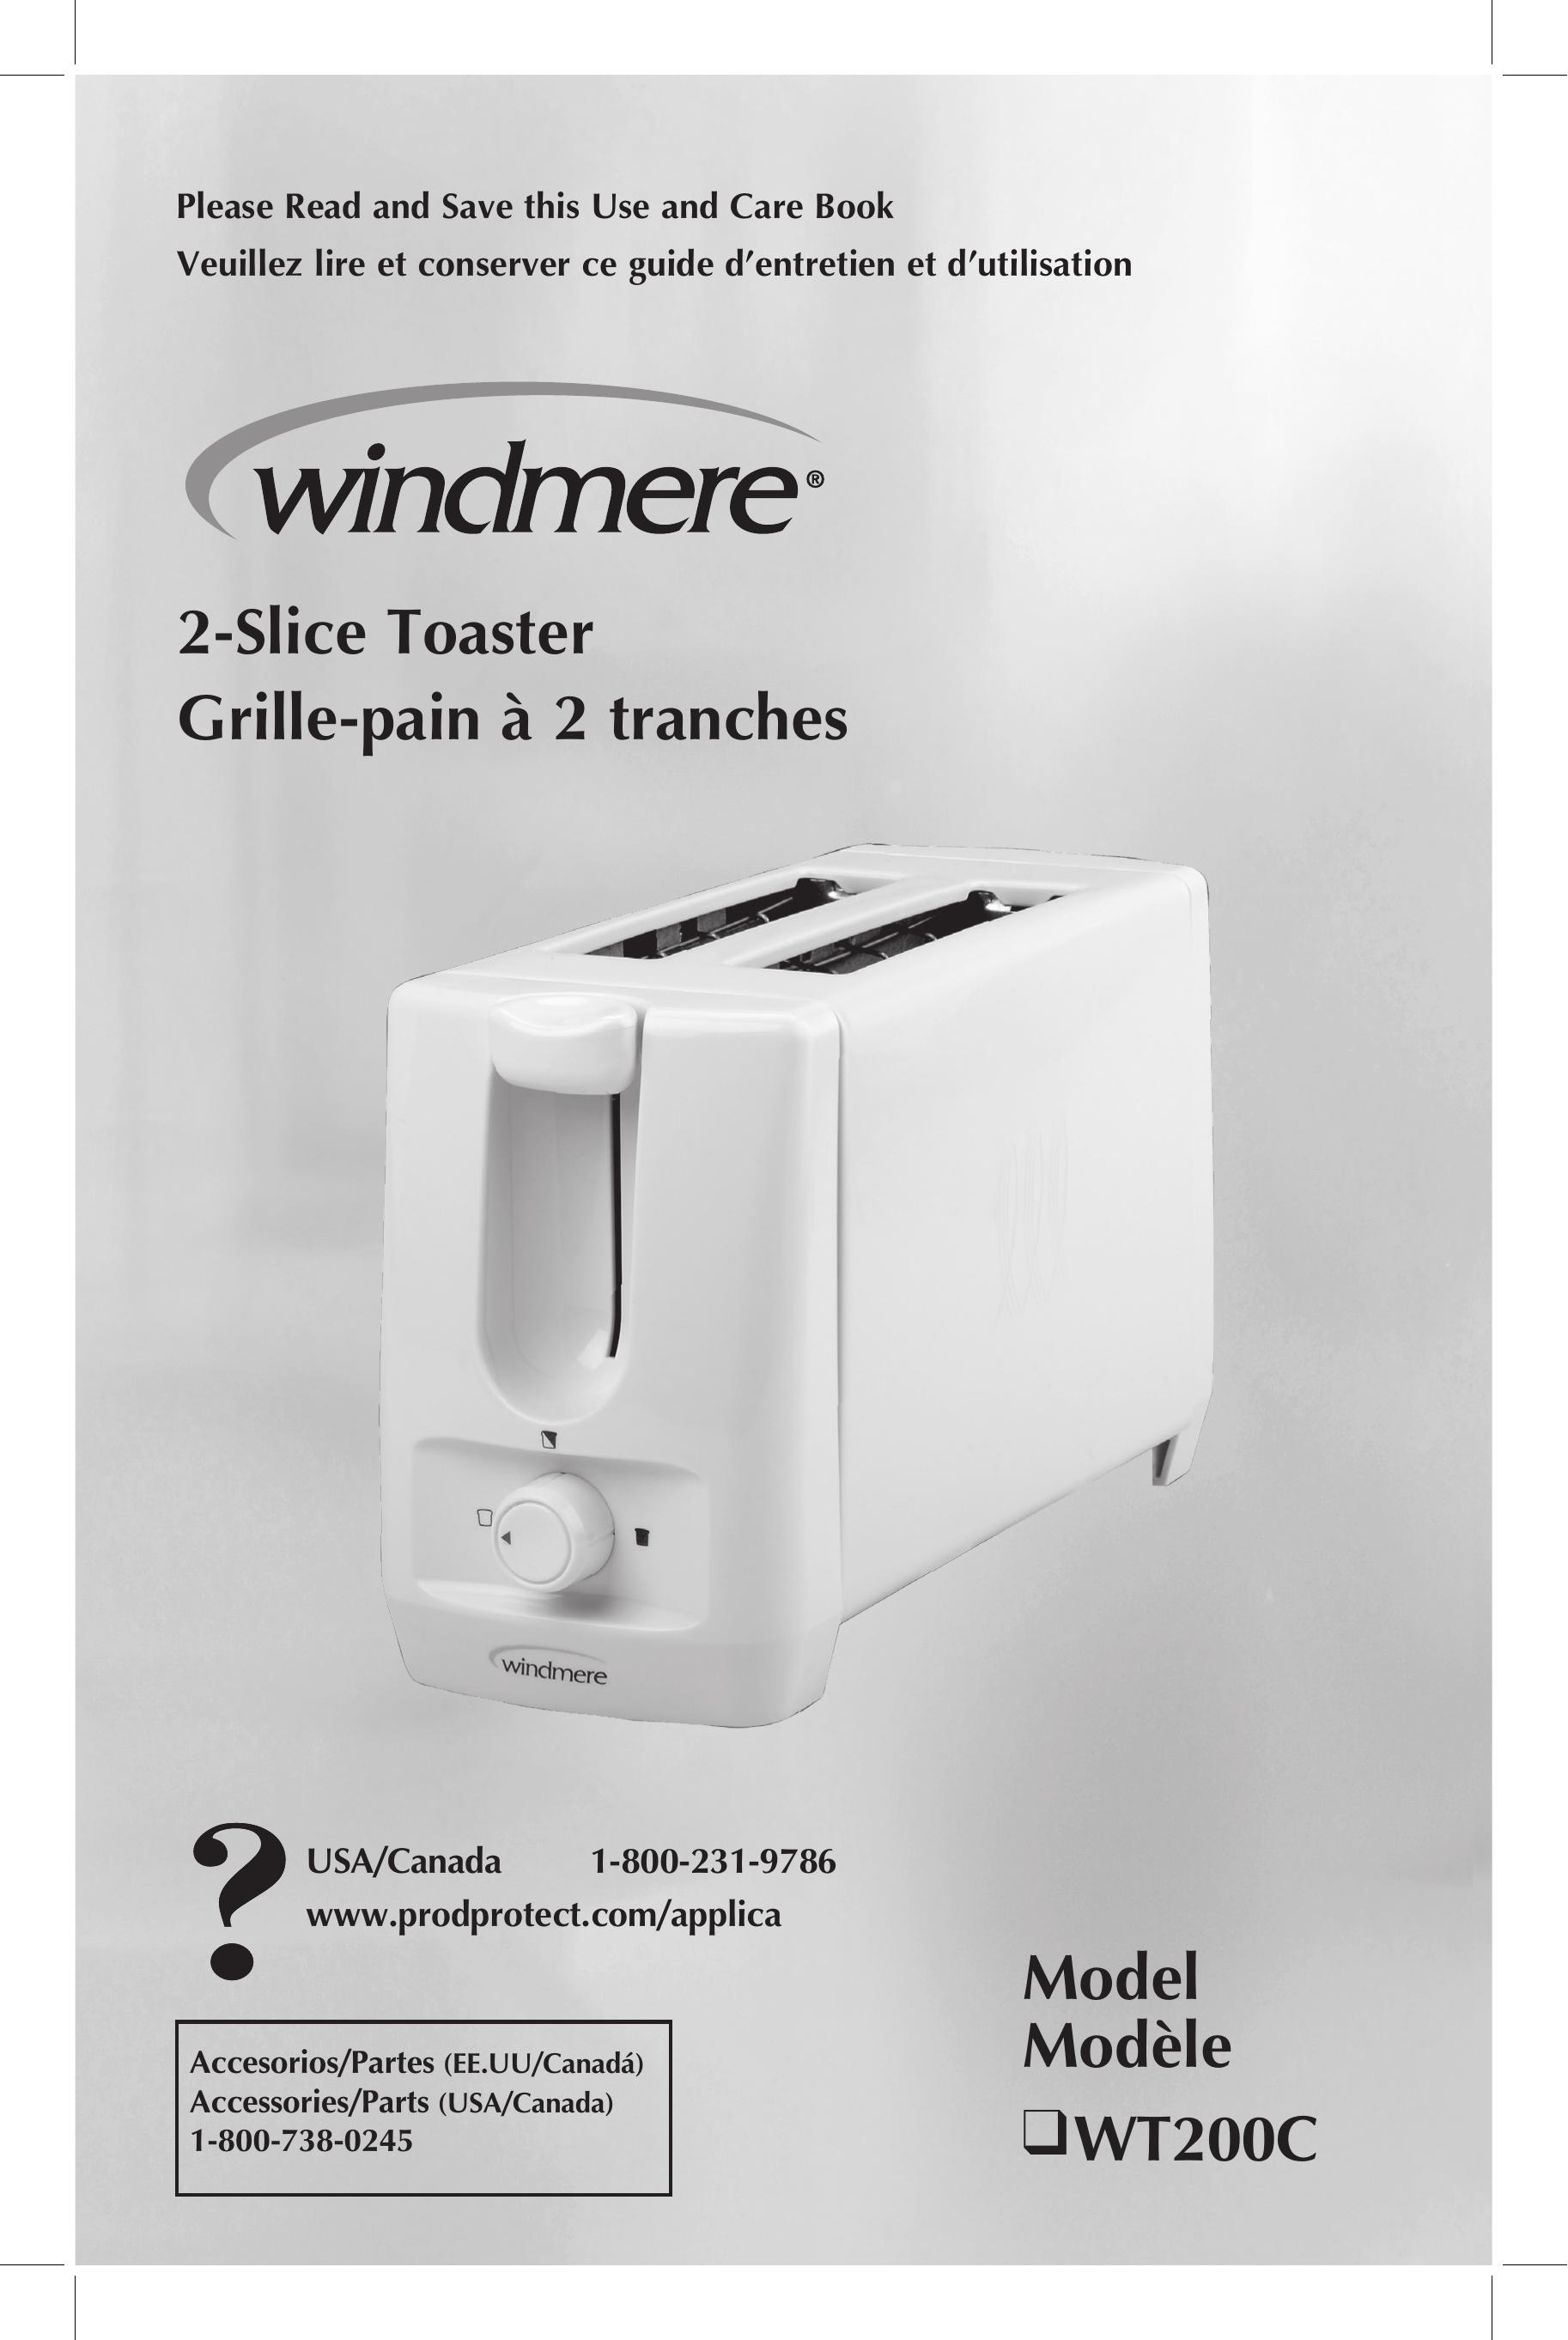 Windmere WT200C Toaster User Manual